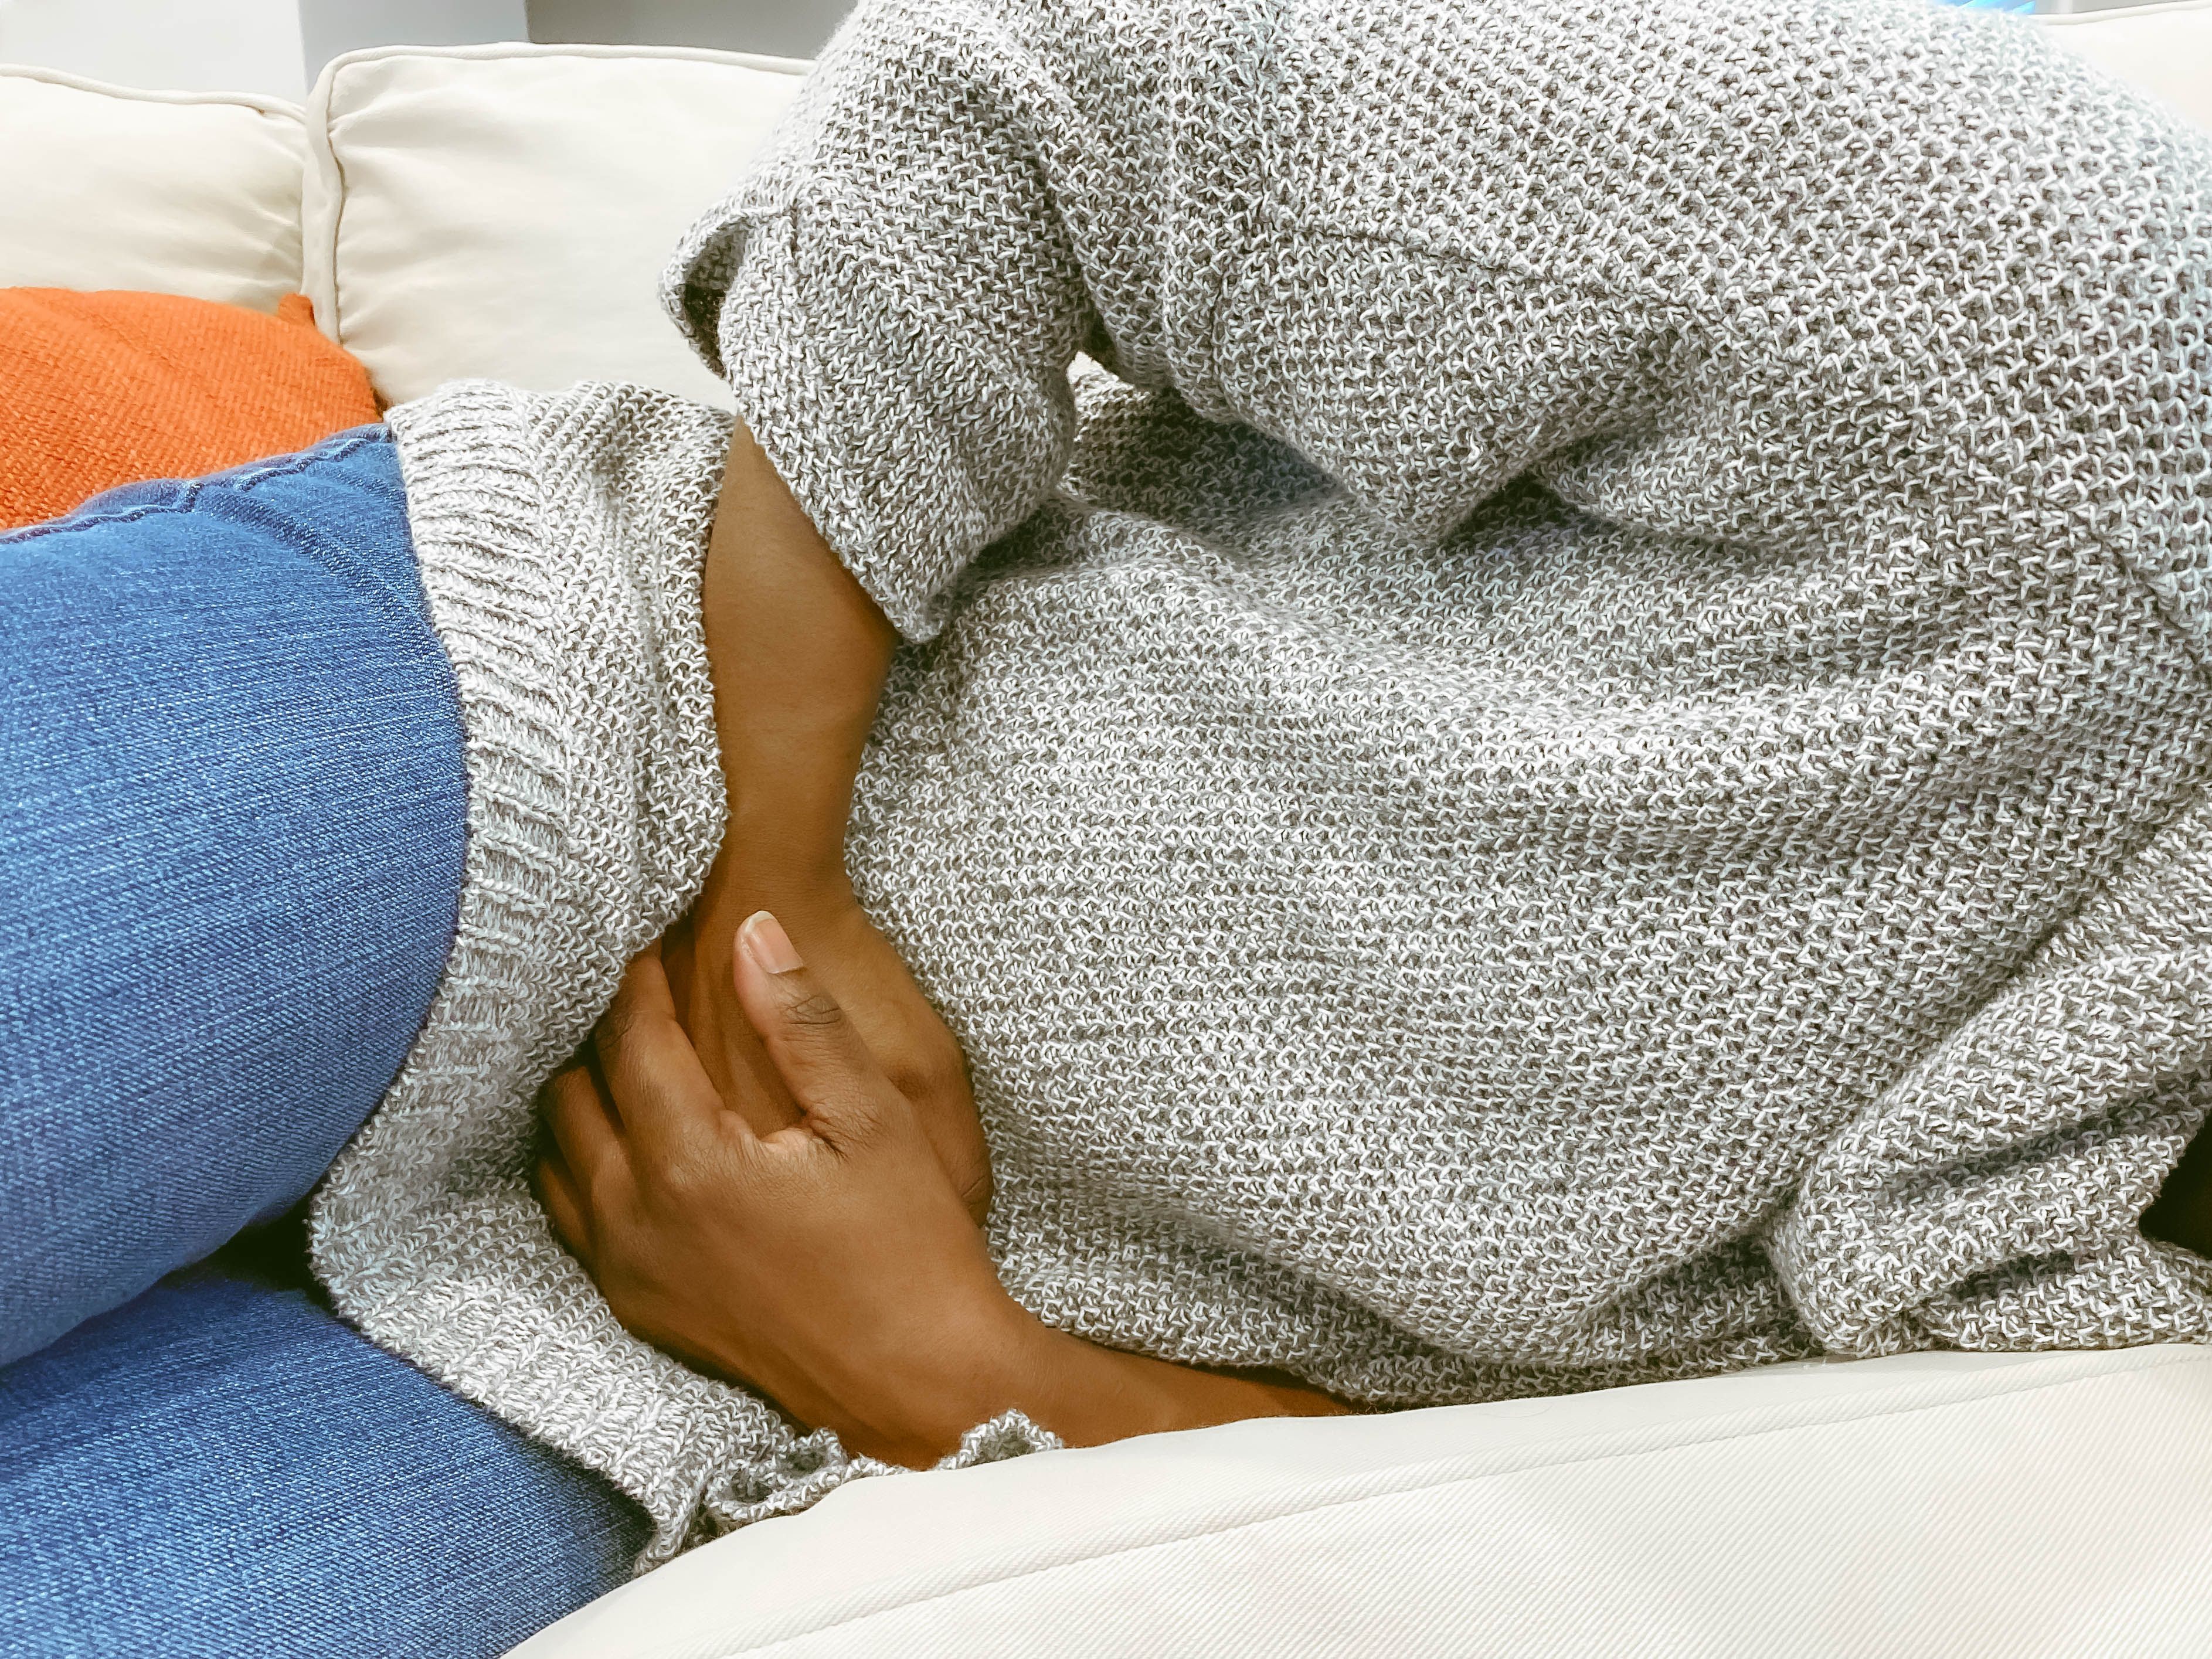 Do Cramps But No Period Mean Pregnancy? Experts Explain